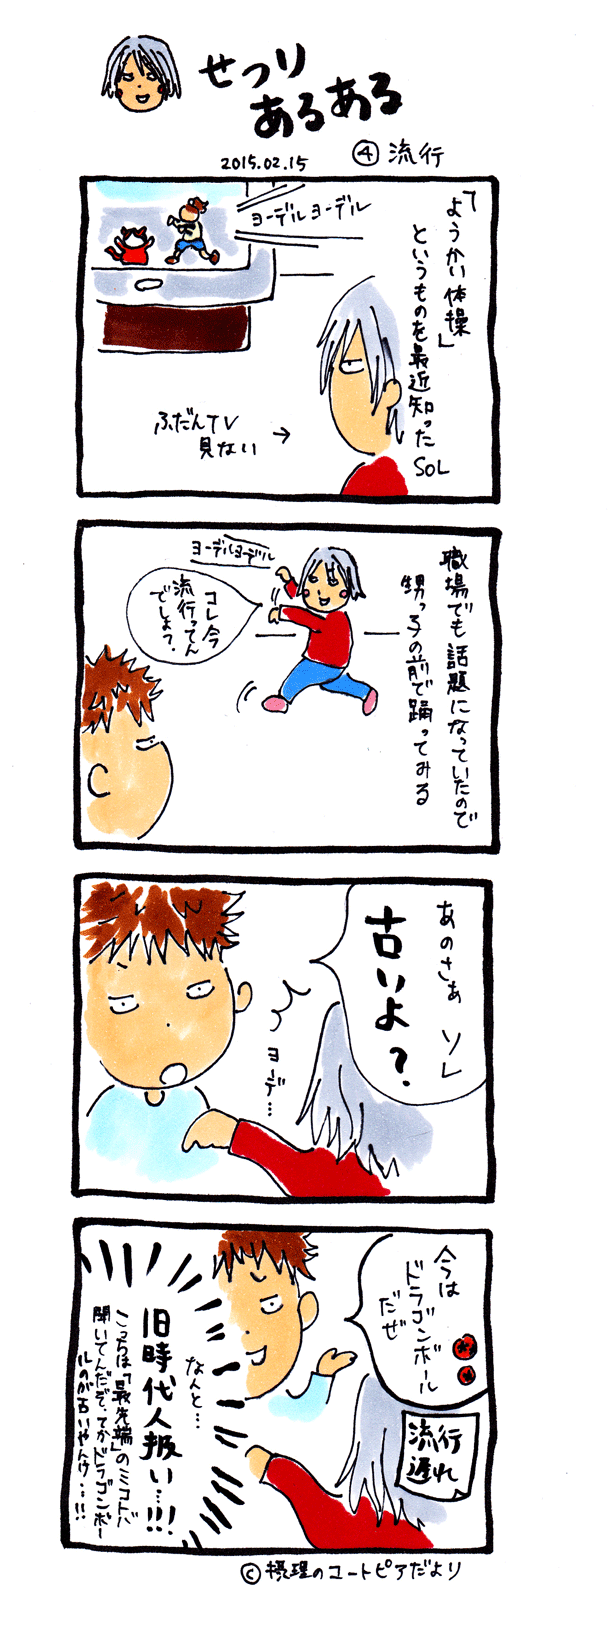 20150215-摂理漫画4-流行-edited